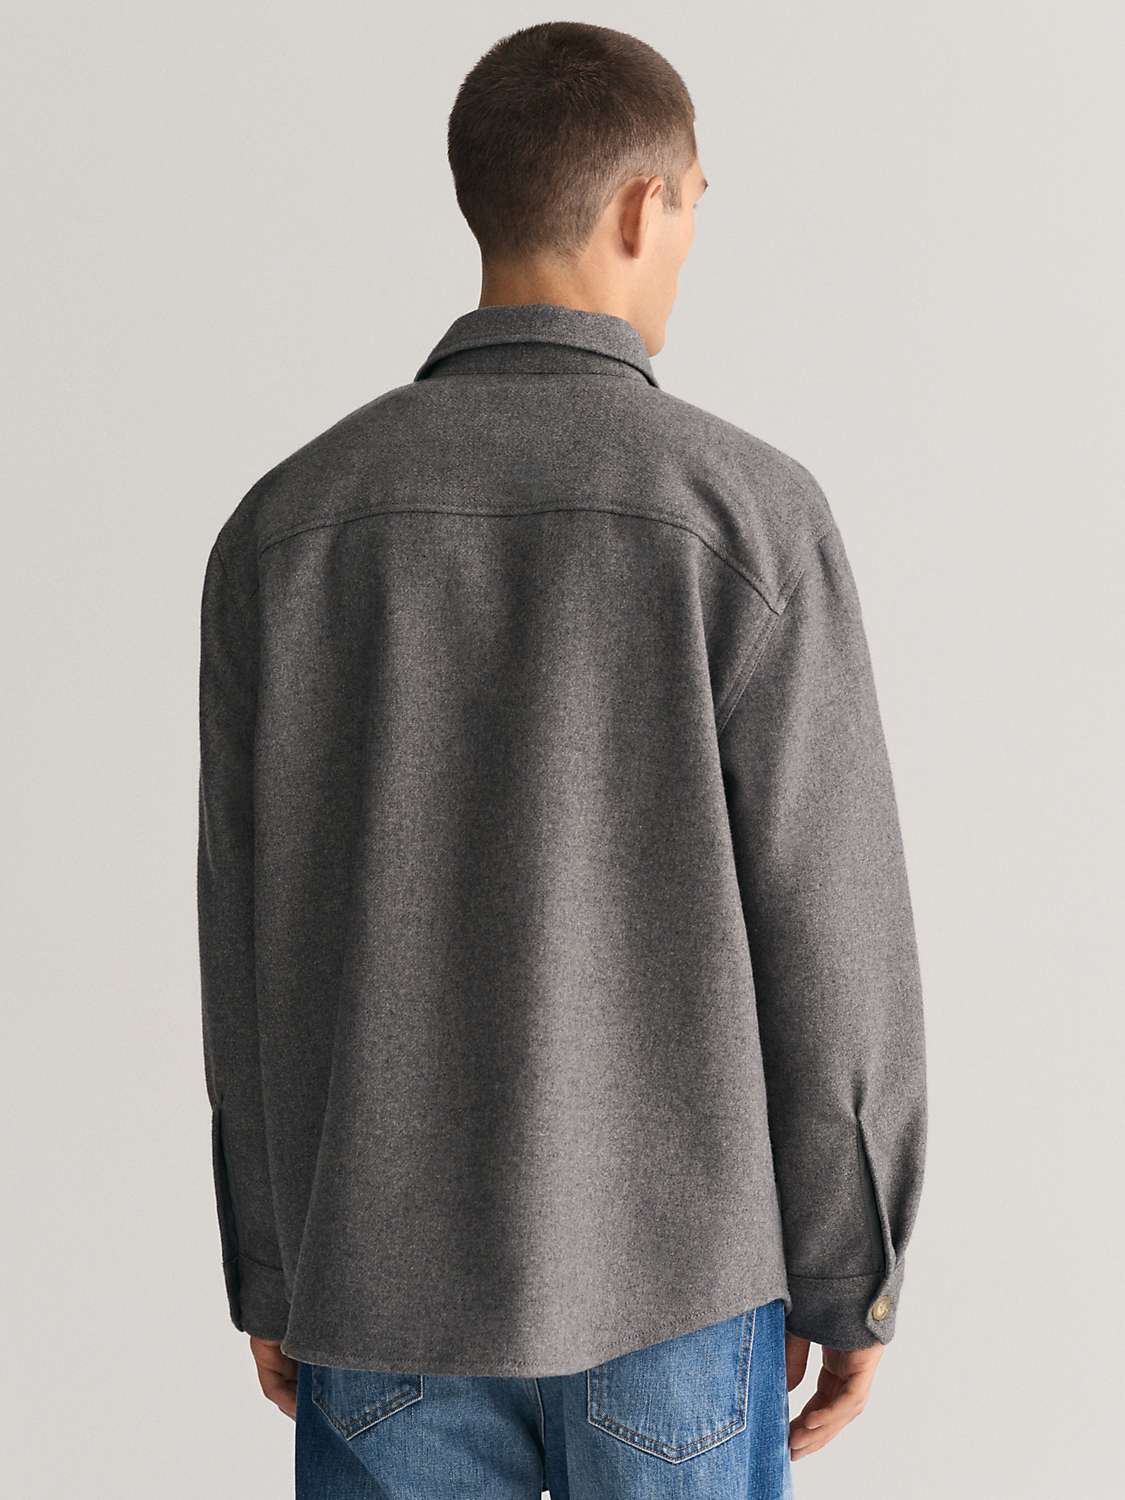 Buy GANT Wool Blend Overshirt, 093 Grey Melange Online at johnlewis.com